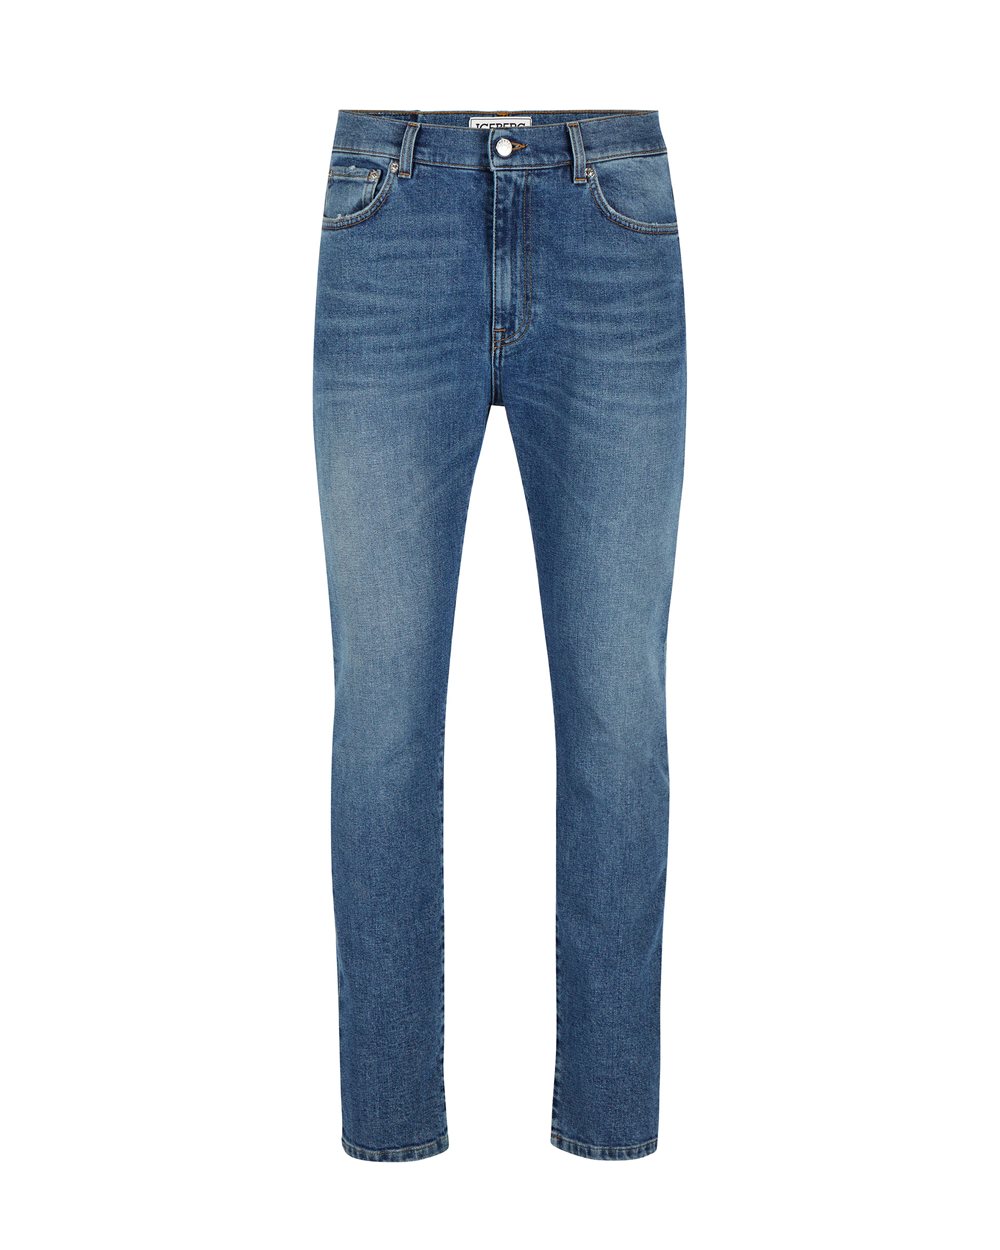 Faded 5-pocket blue jeans - PER FARE LE REGOLE | Iceberg - Official Website